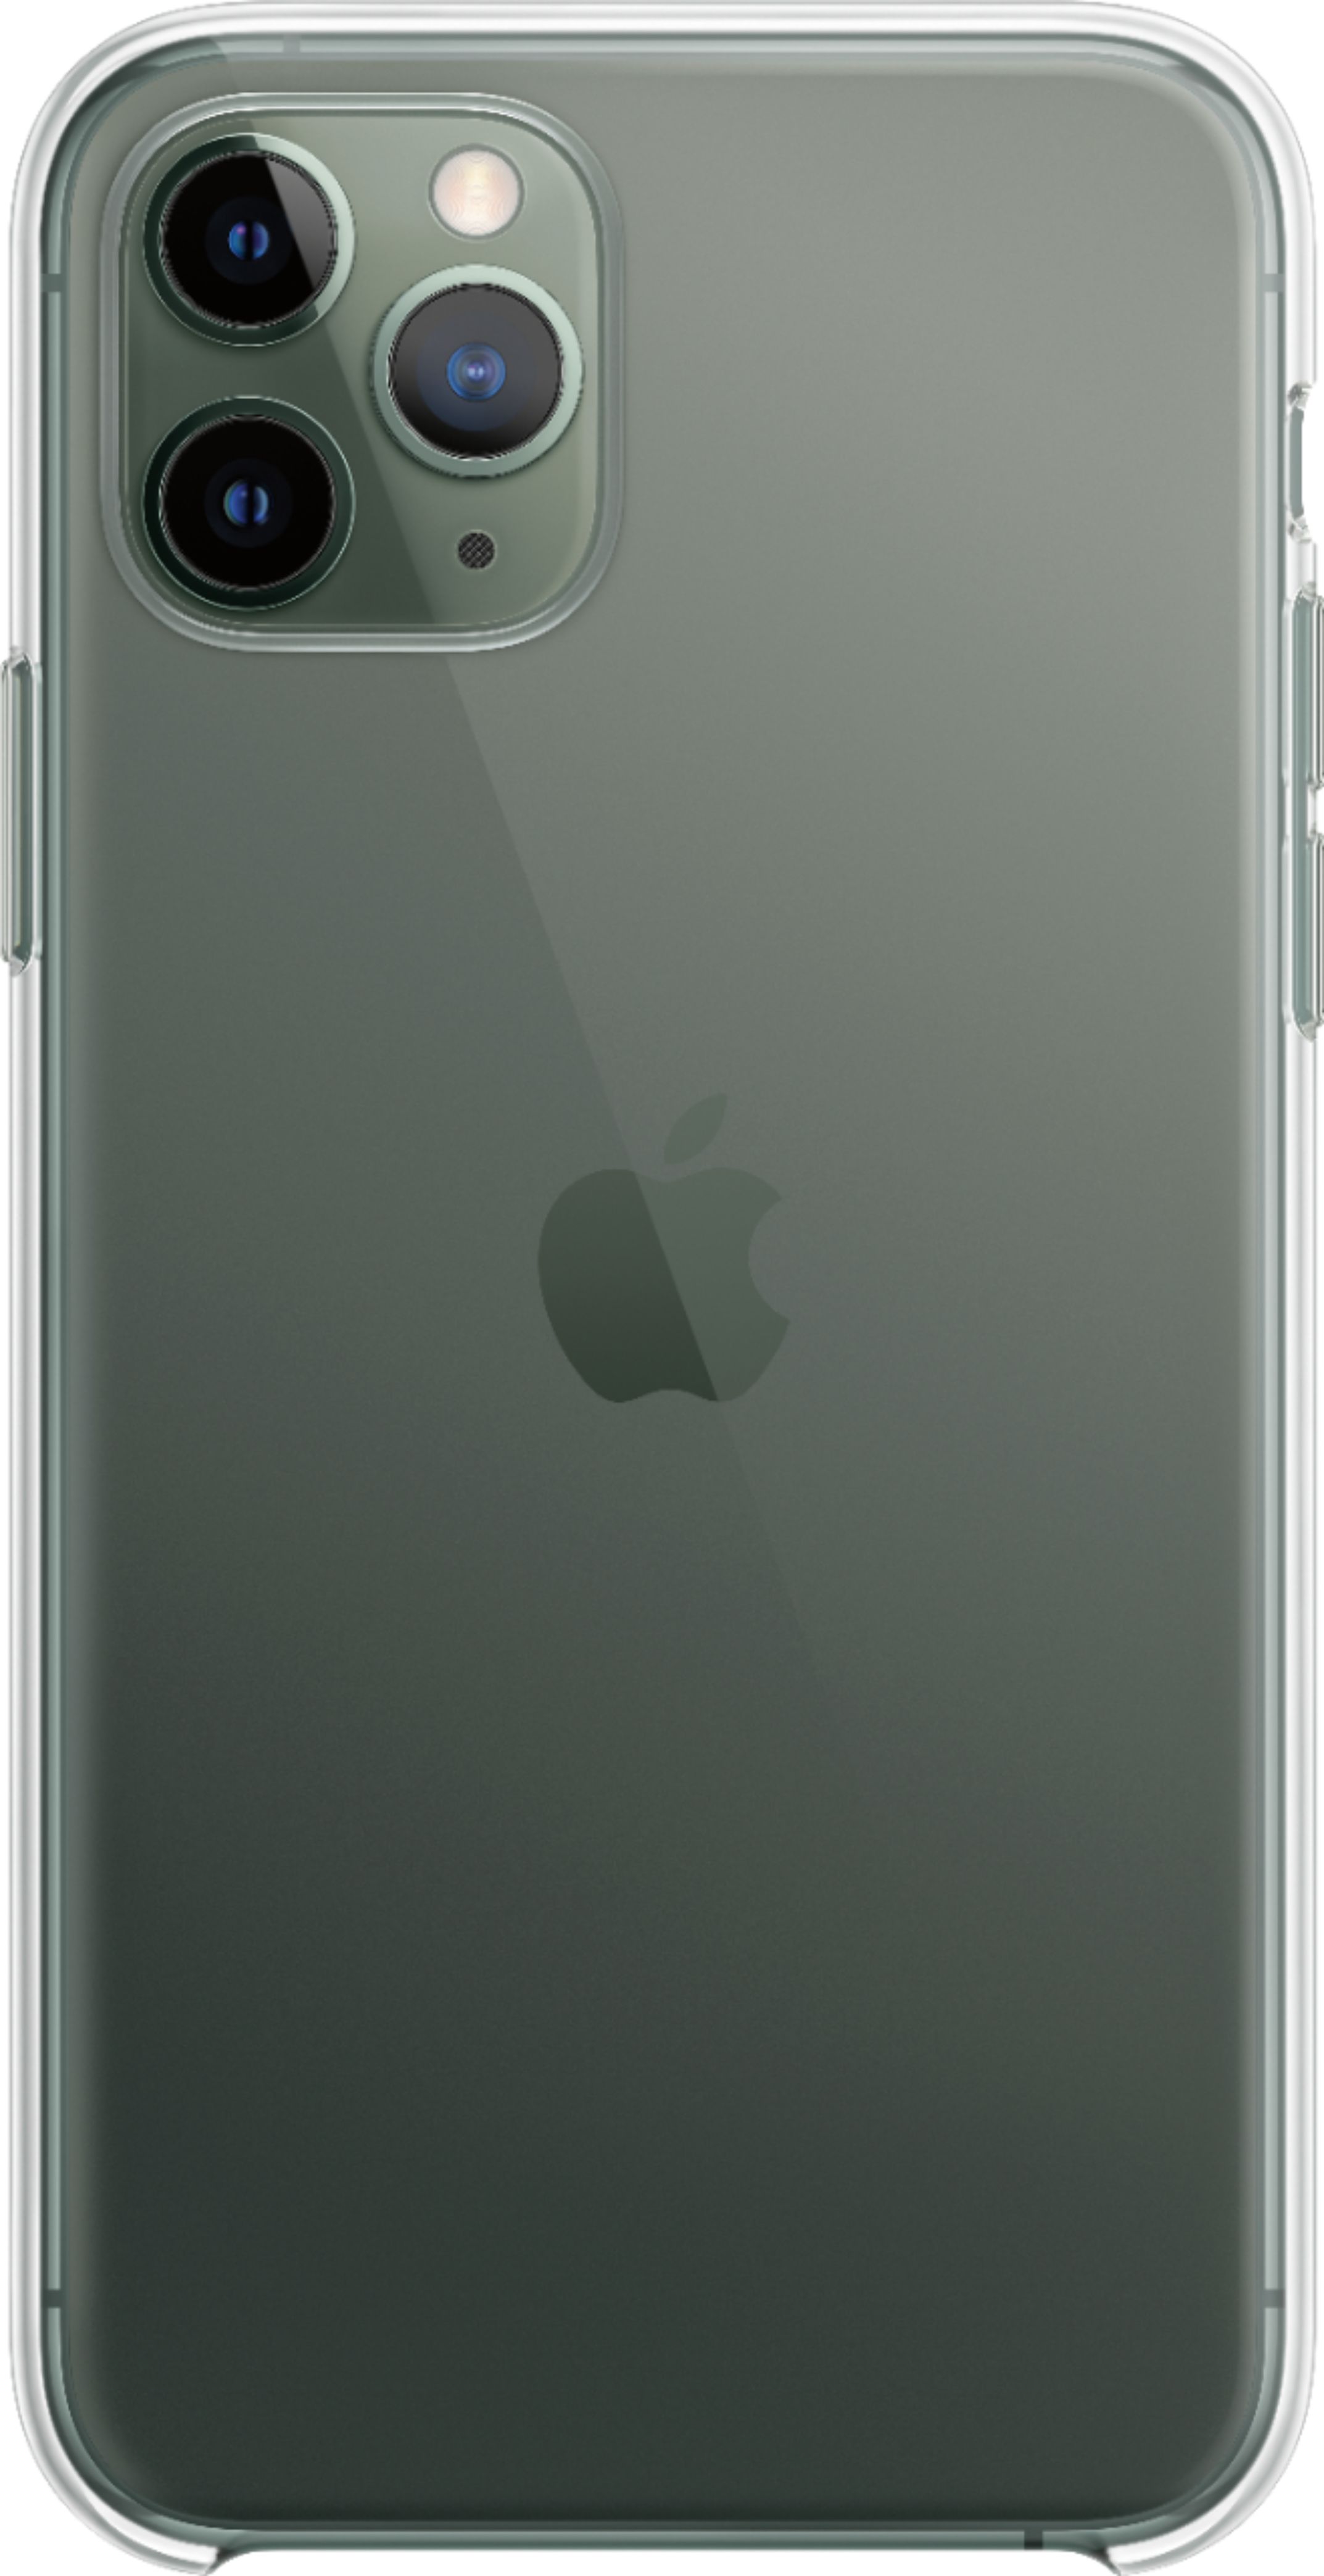 Apple Iphone 11 Pro Clear Case Mwyk2zm A Best Buy